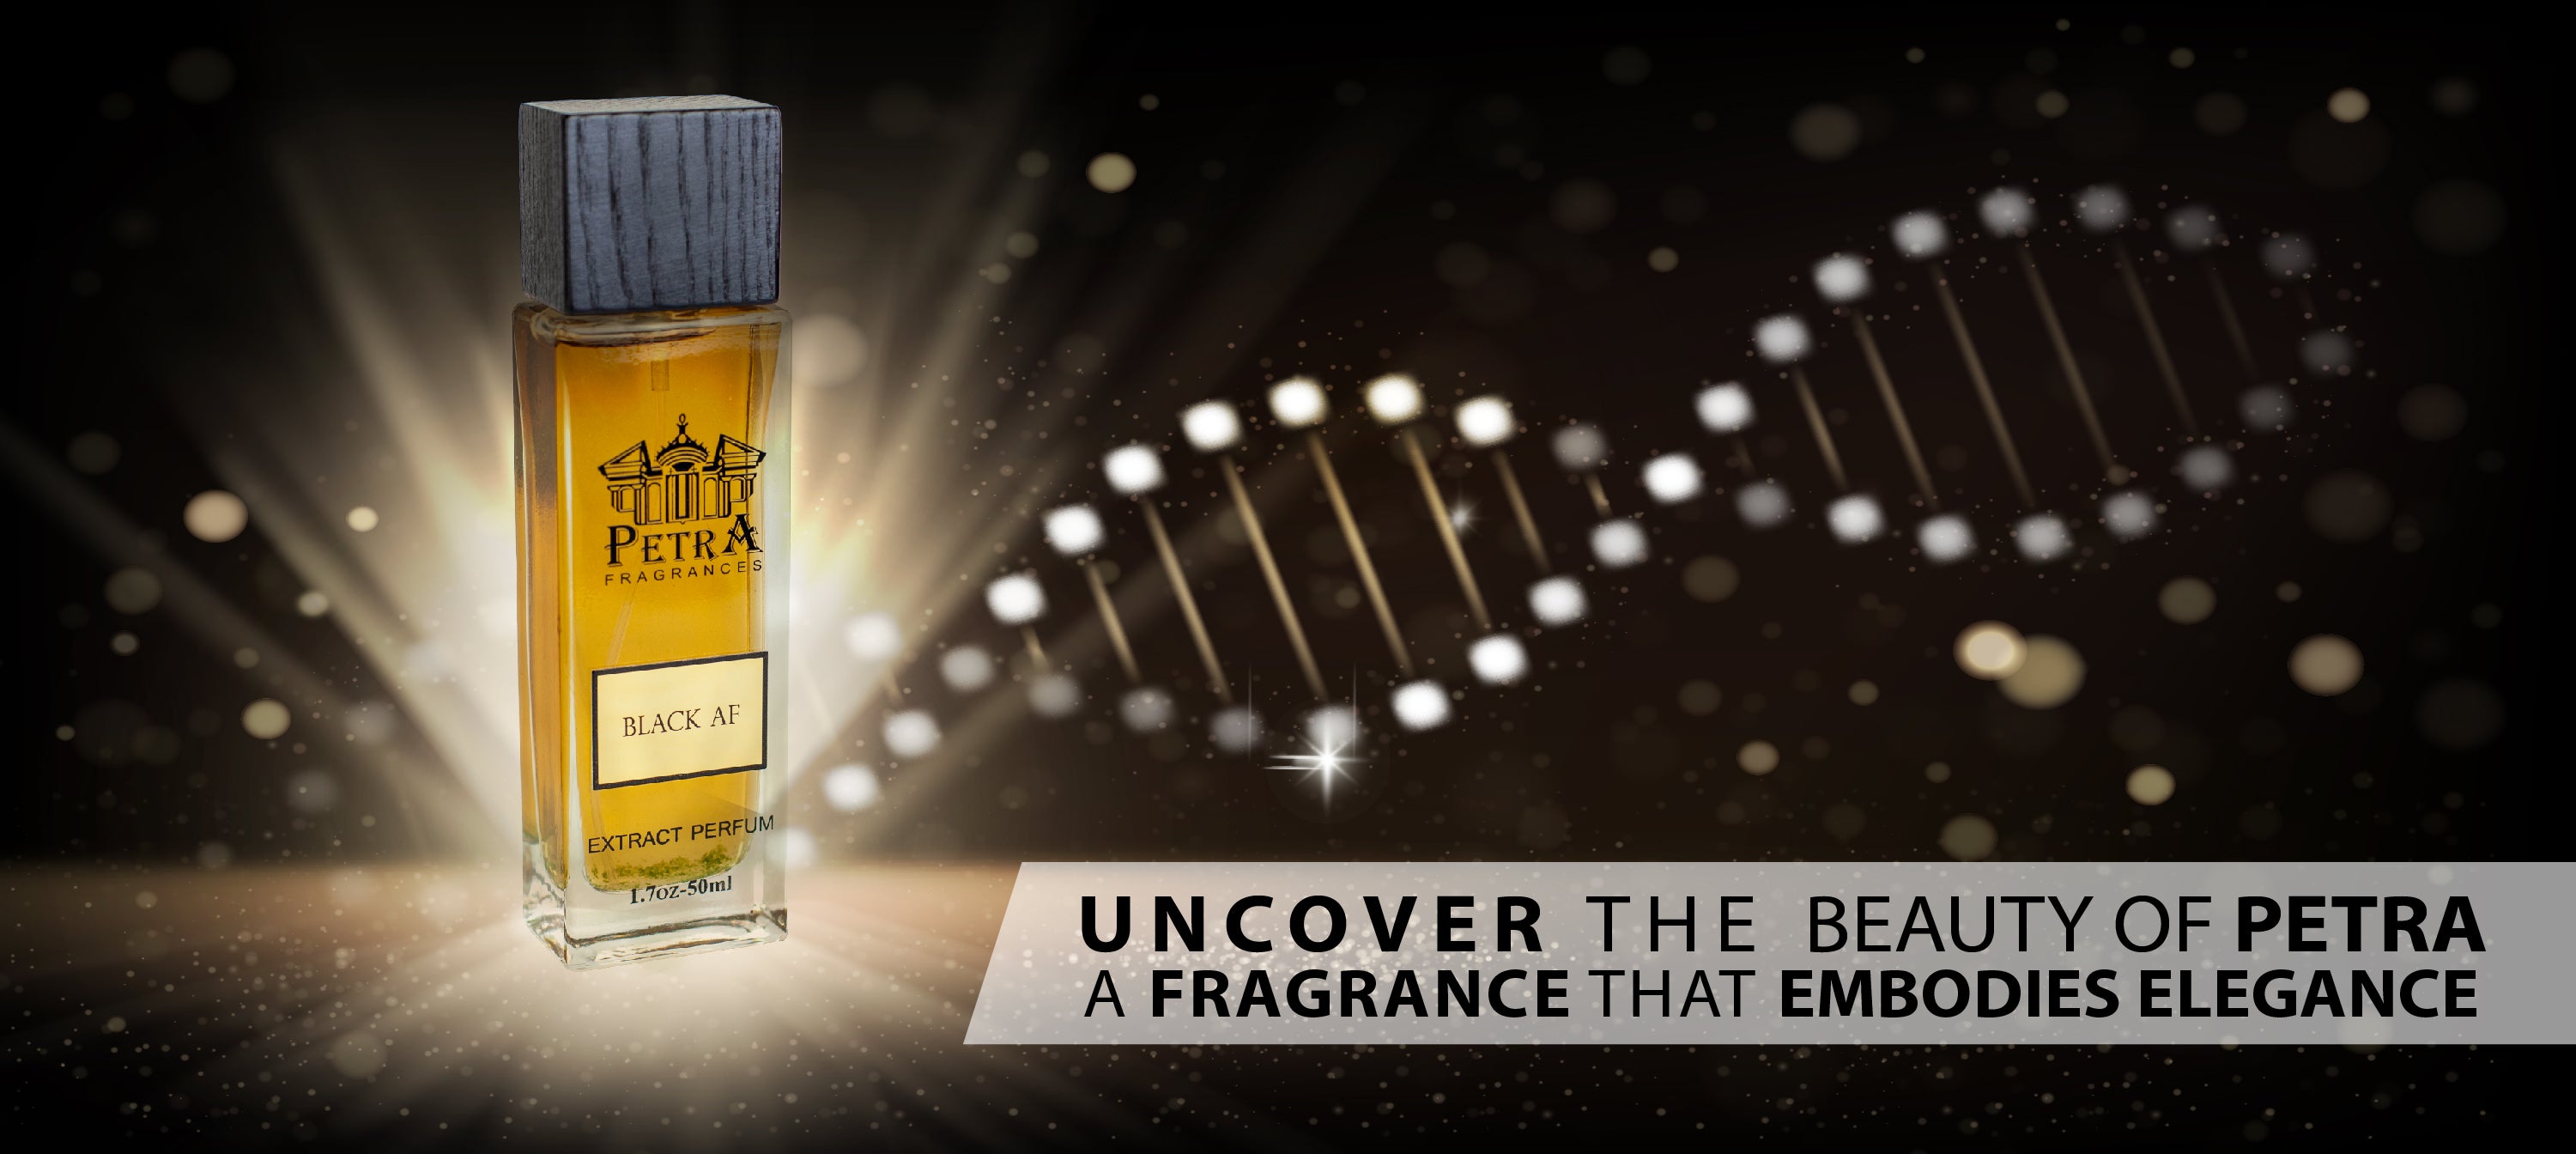 Ombre Nomade - Inspired Alternative Perfume, Extrait De Parfum, Fragrances  For Men & Women - Ombre Shadow (50ml) : : Beauty